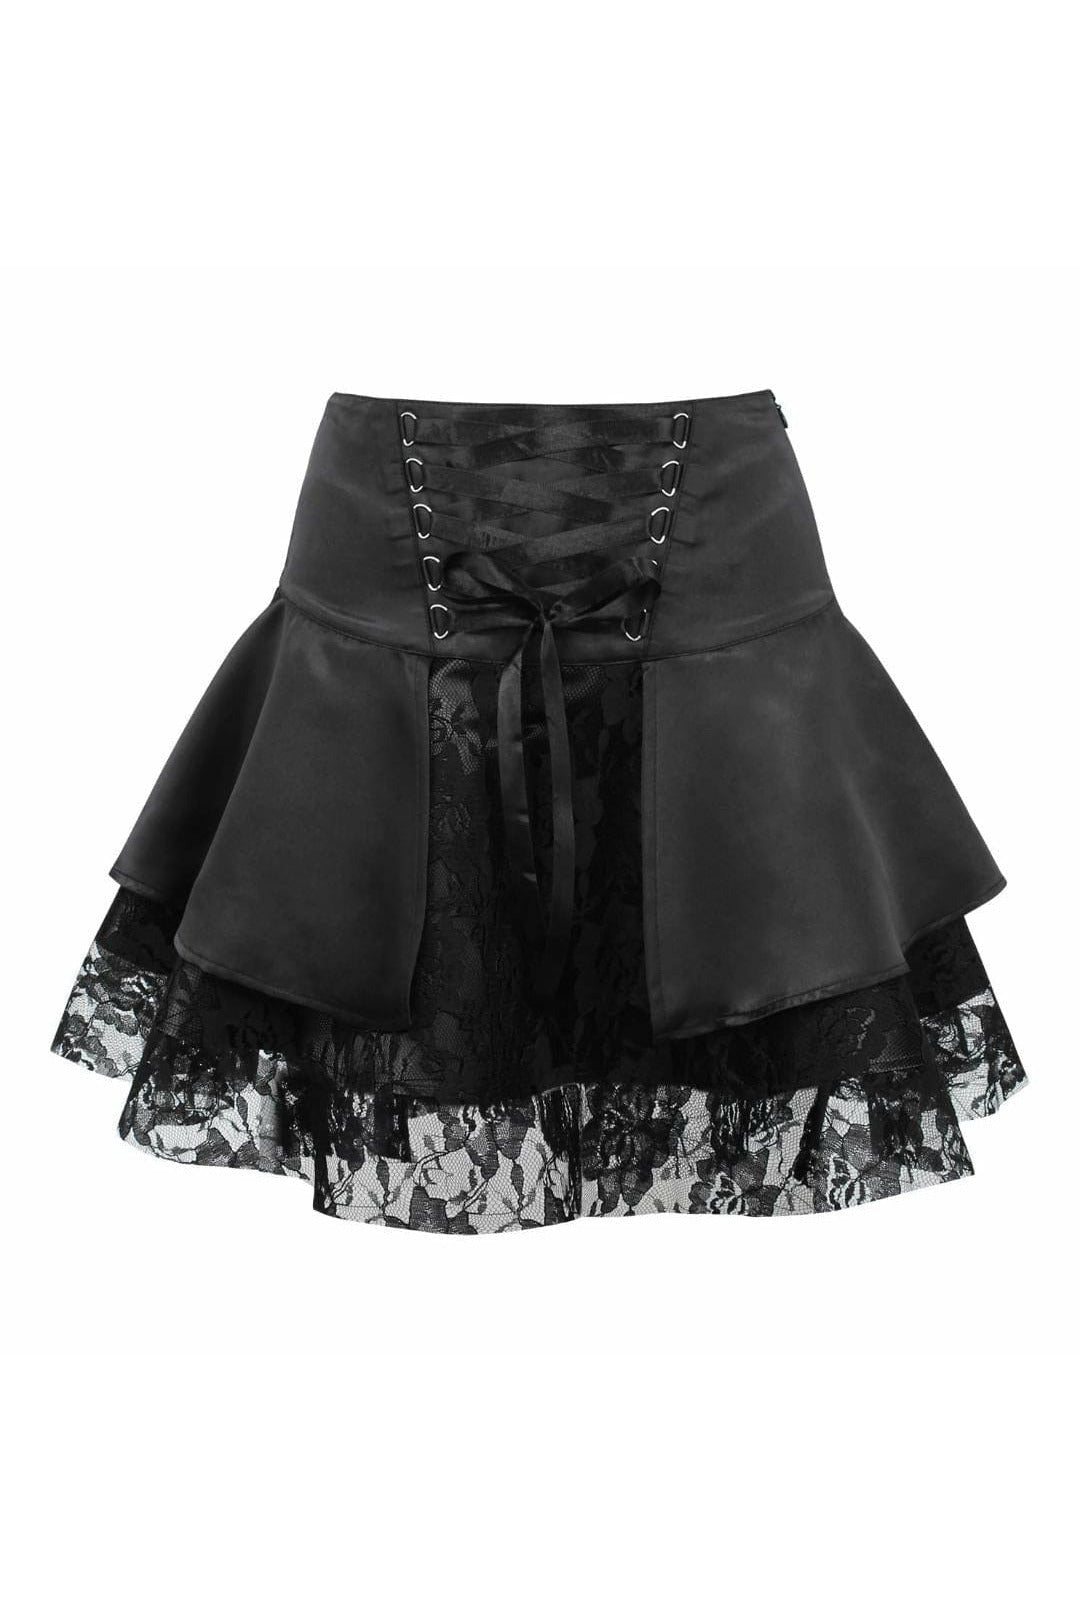 Black w/Black Lace Gothic Skirt-Daisy Corsets